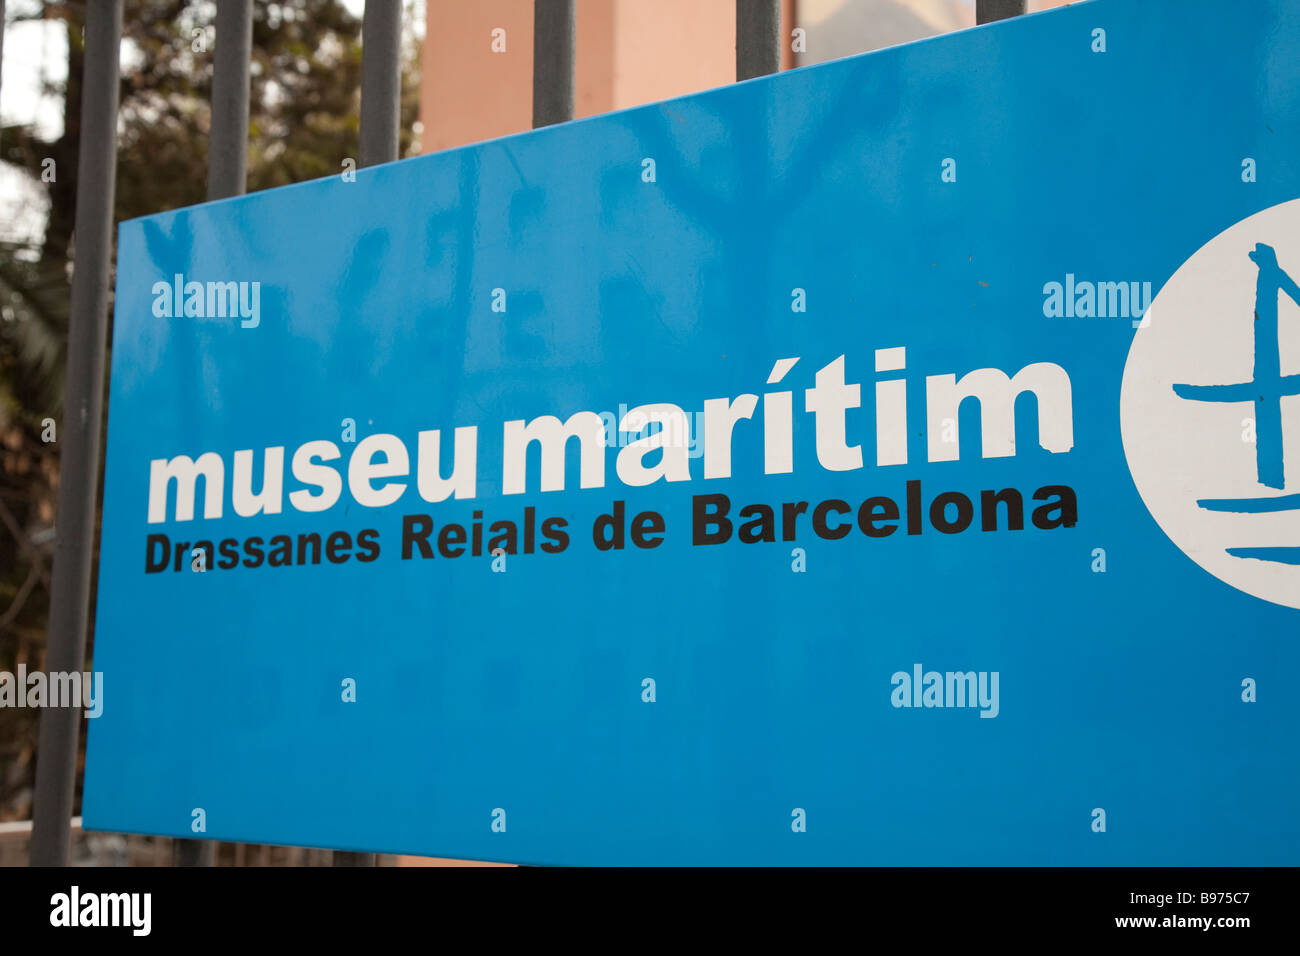 Museu Maritim, Museum, Barcelona spain Stock Photo